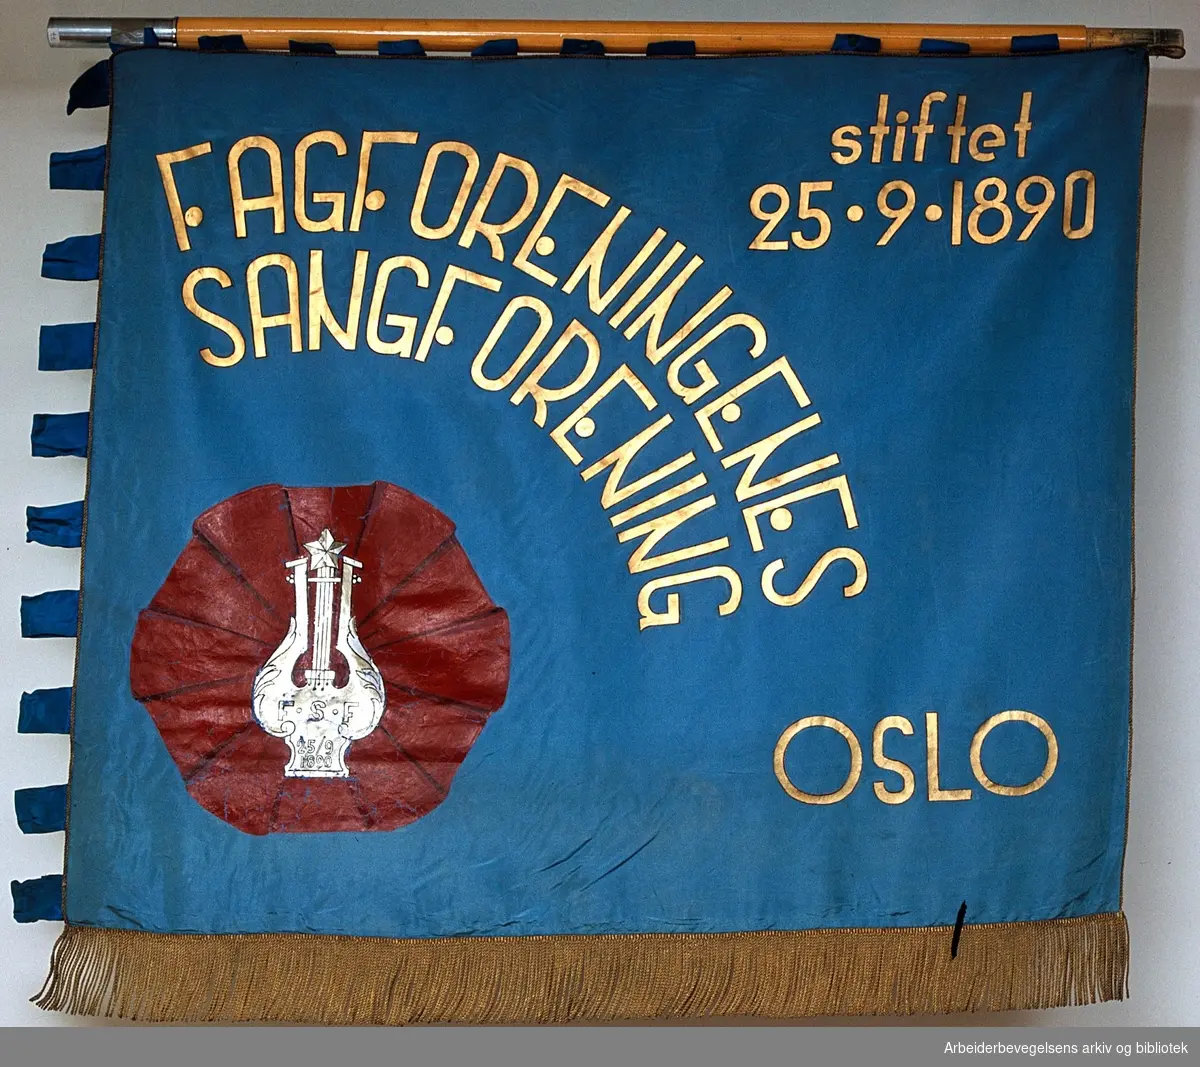 Fagforeningenes sangforening, Oslo .Stiftet 25. september 1890..Forside..Fanetekst: Fagforeningenes Sangforening Oslo. Stiftet 25-9-1890